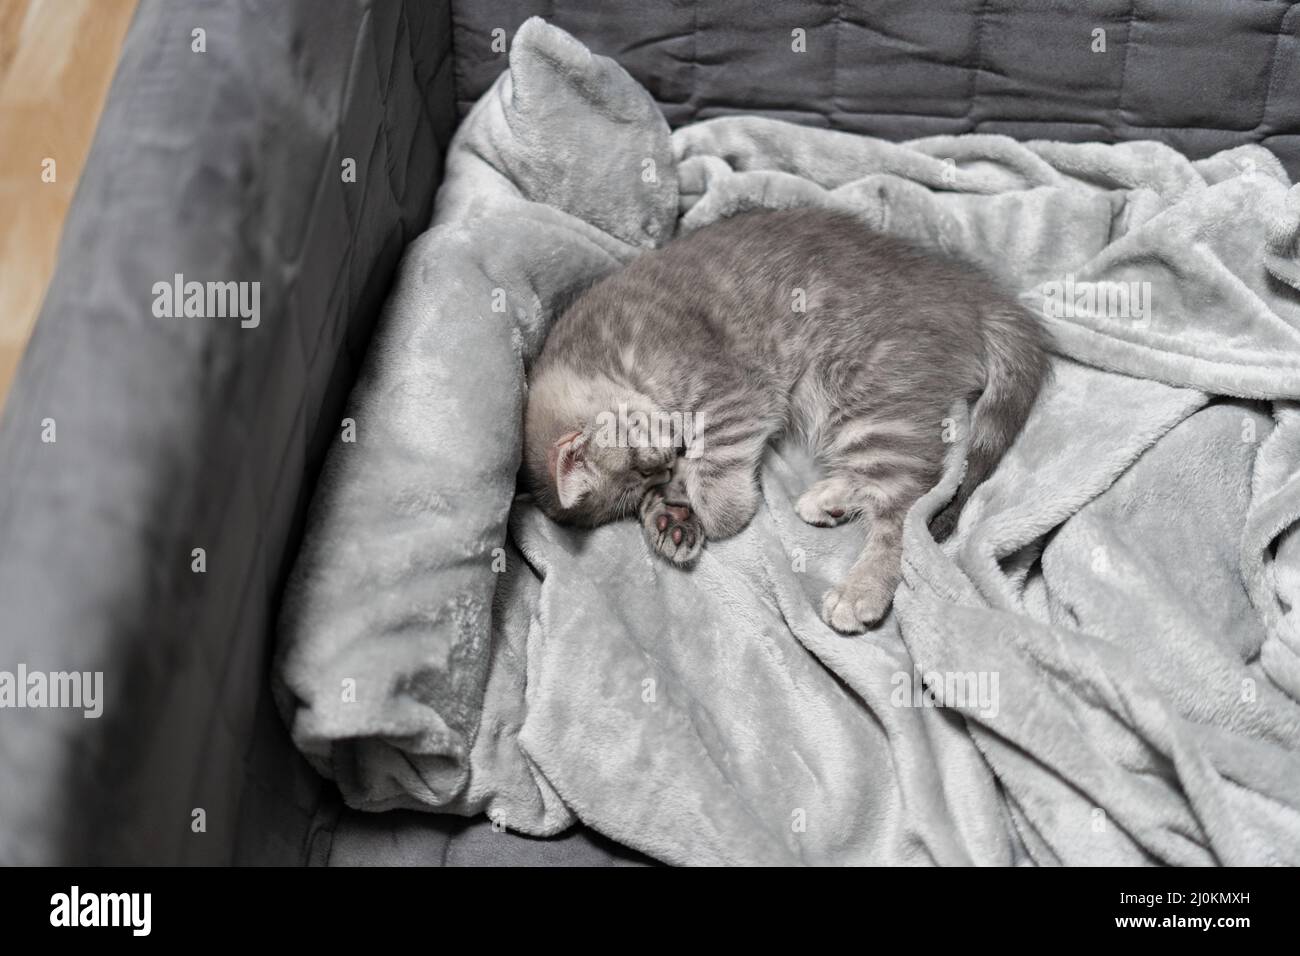 Sleeping cat, perfect dream. Animal child fell asleep. Beautiful little gray tabby kid cat of Scottish Straight breed sleeps swe Stock Photo